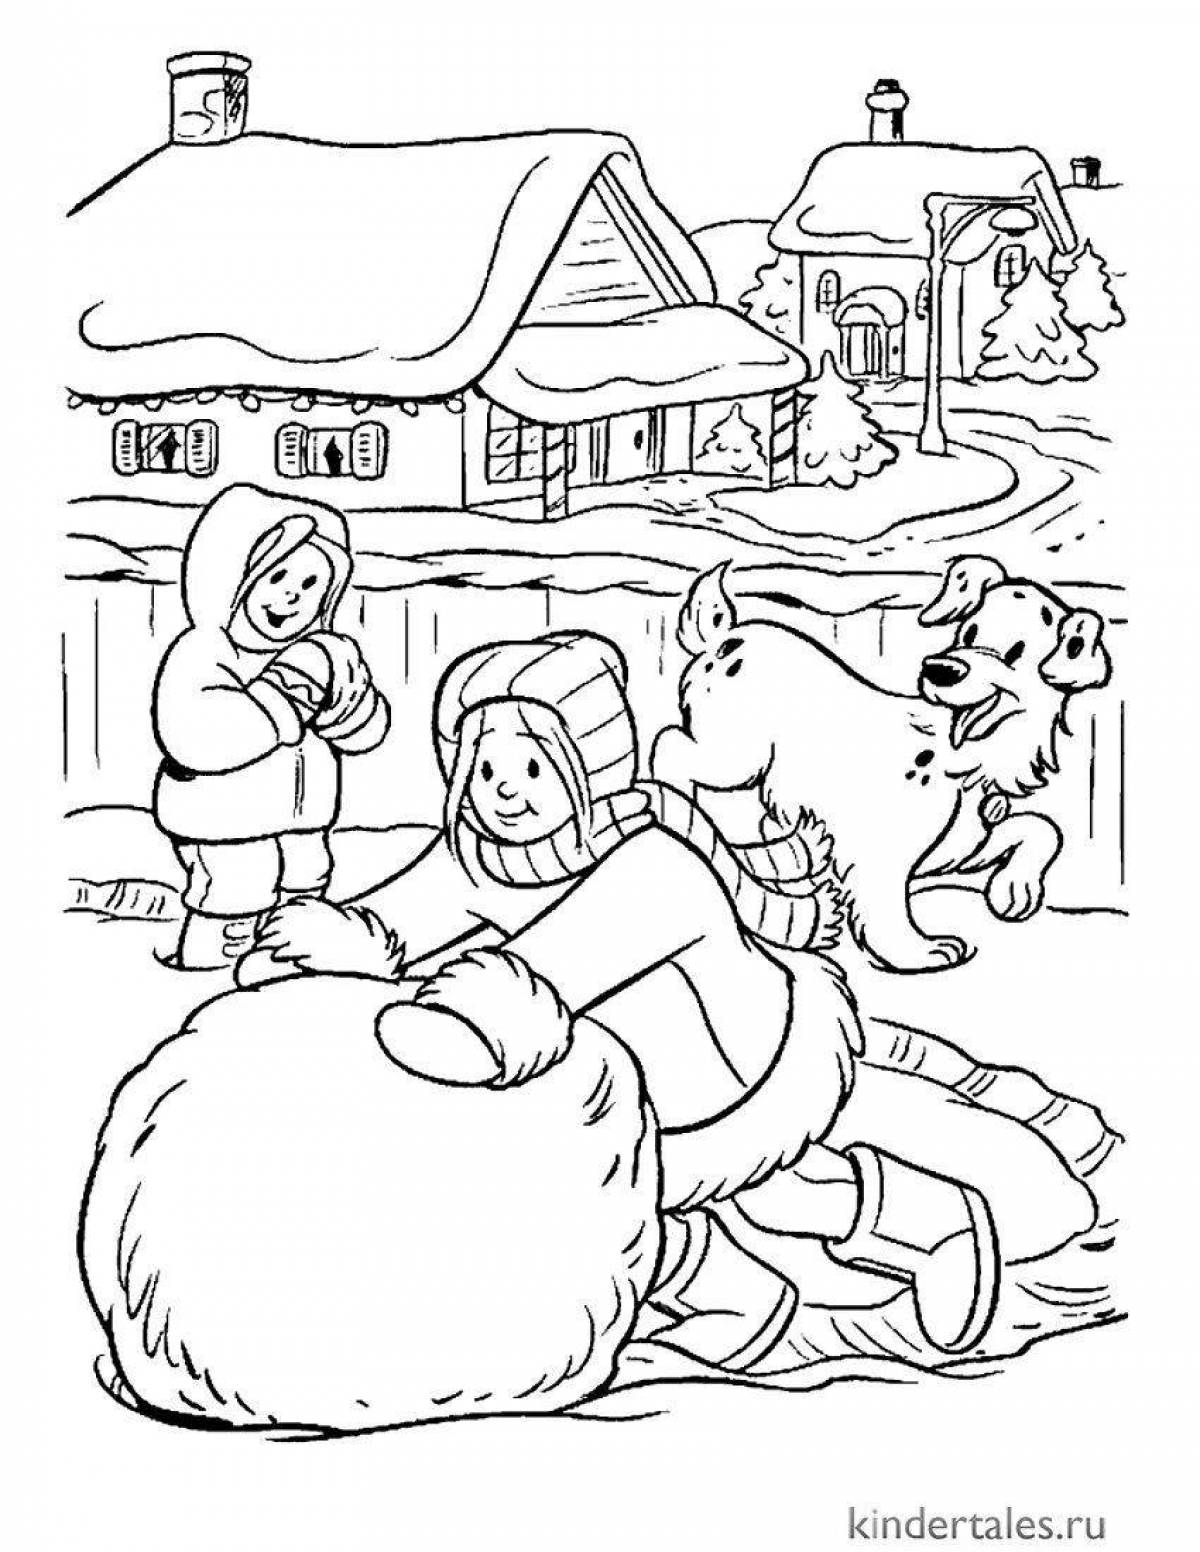 Brilliant winter village coloring page